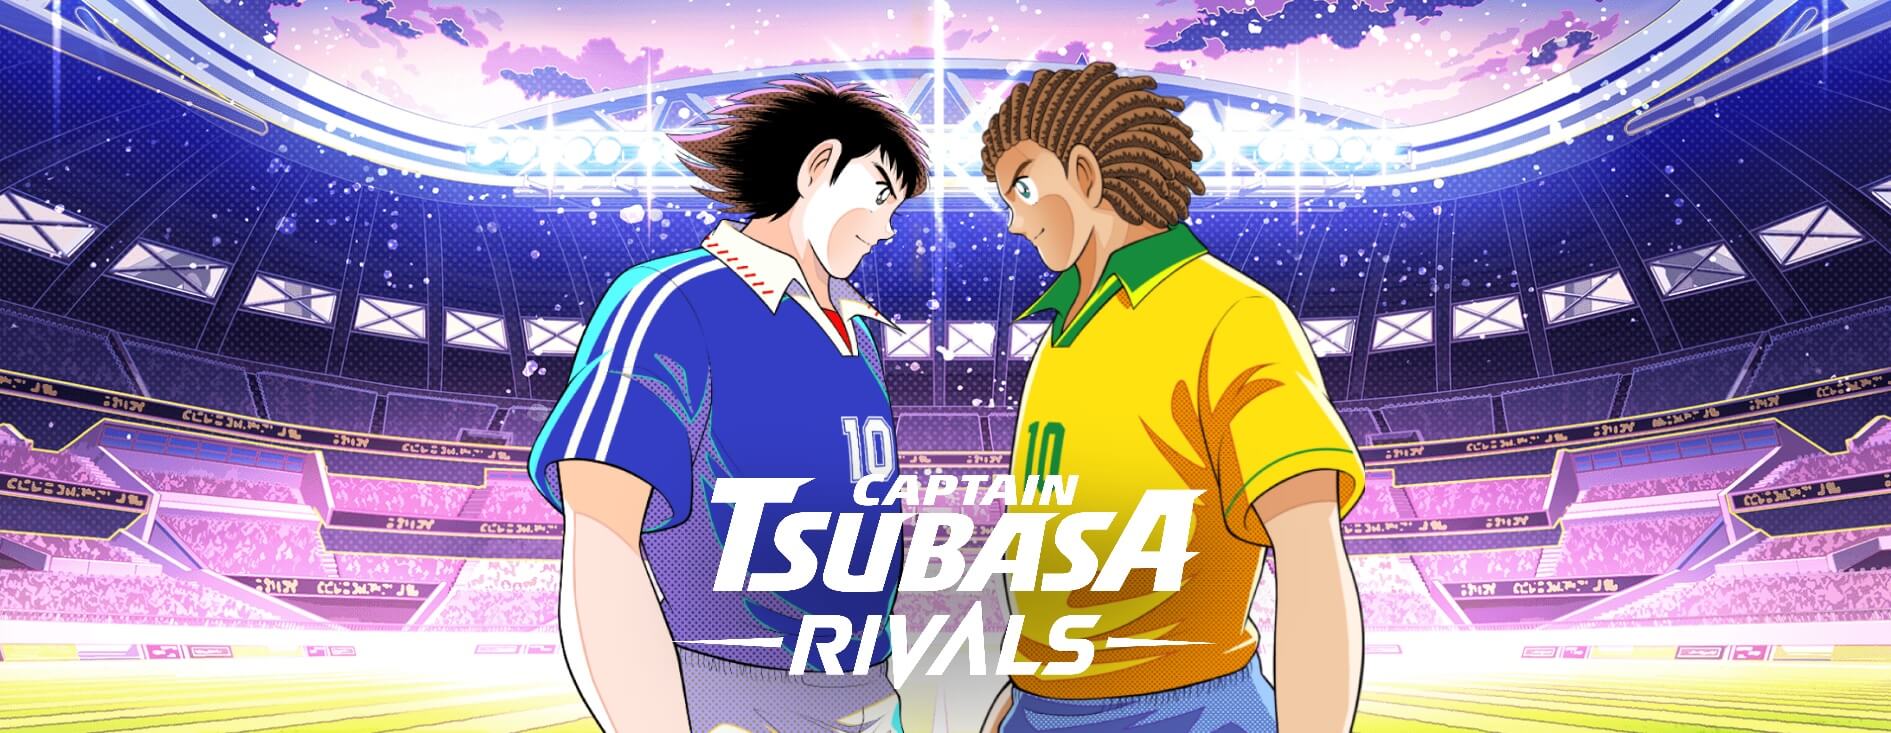 Captain Tsubasa - Rivals Blockchain Game